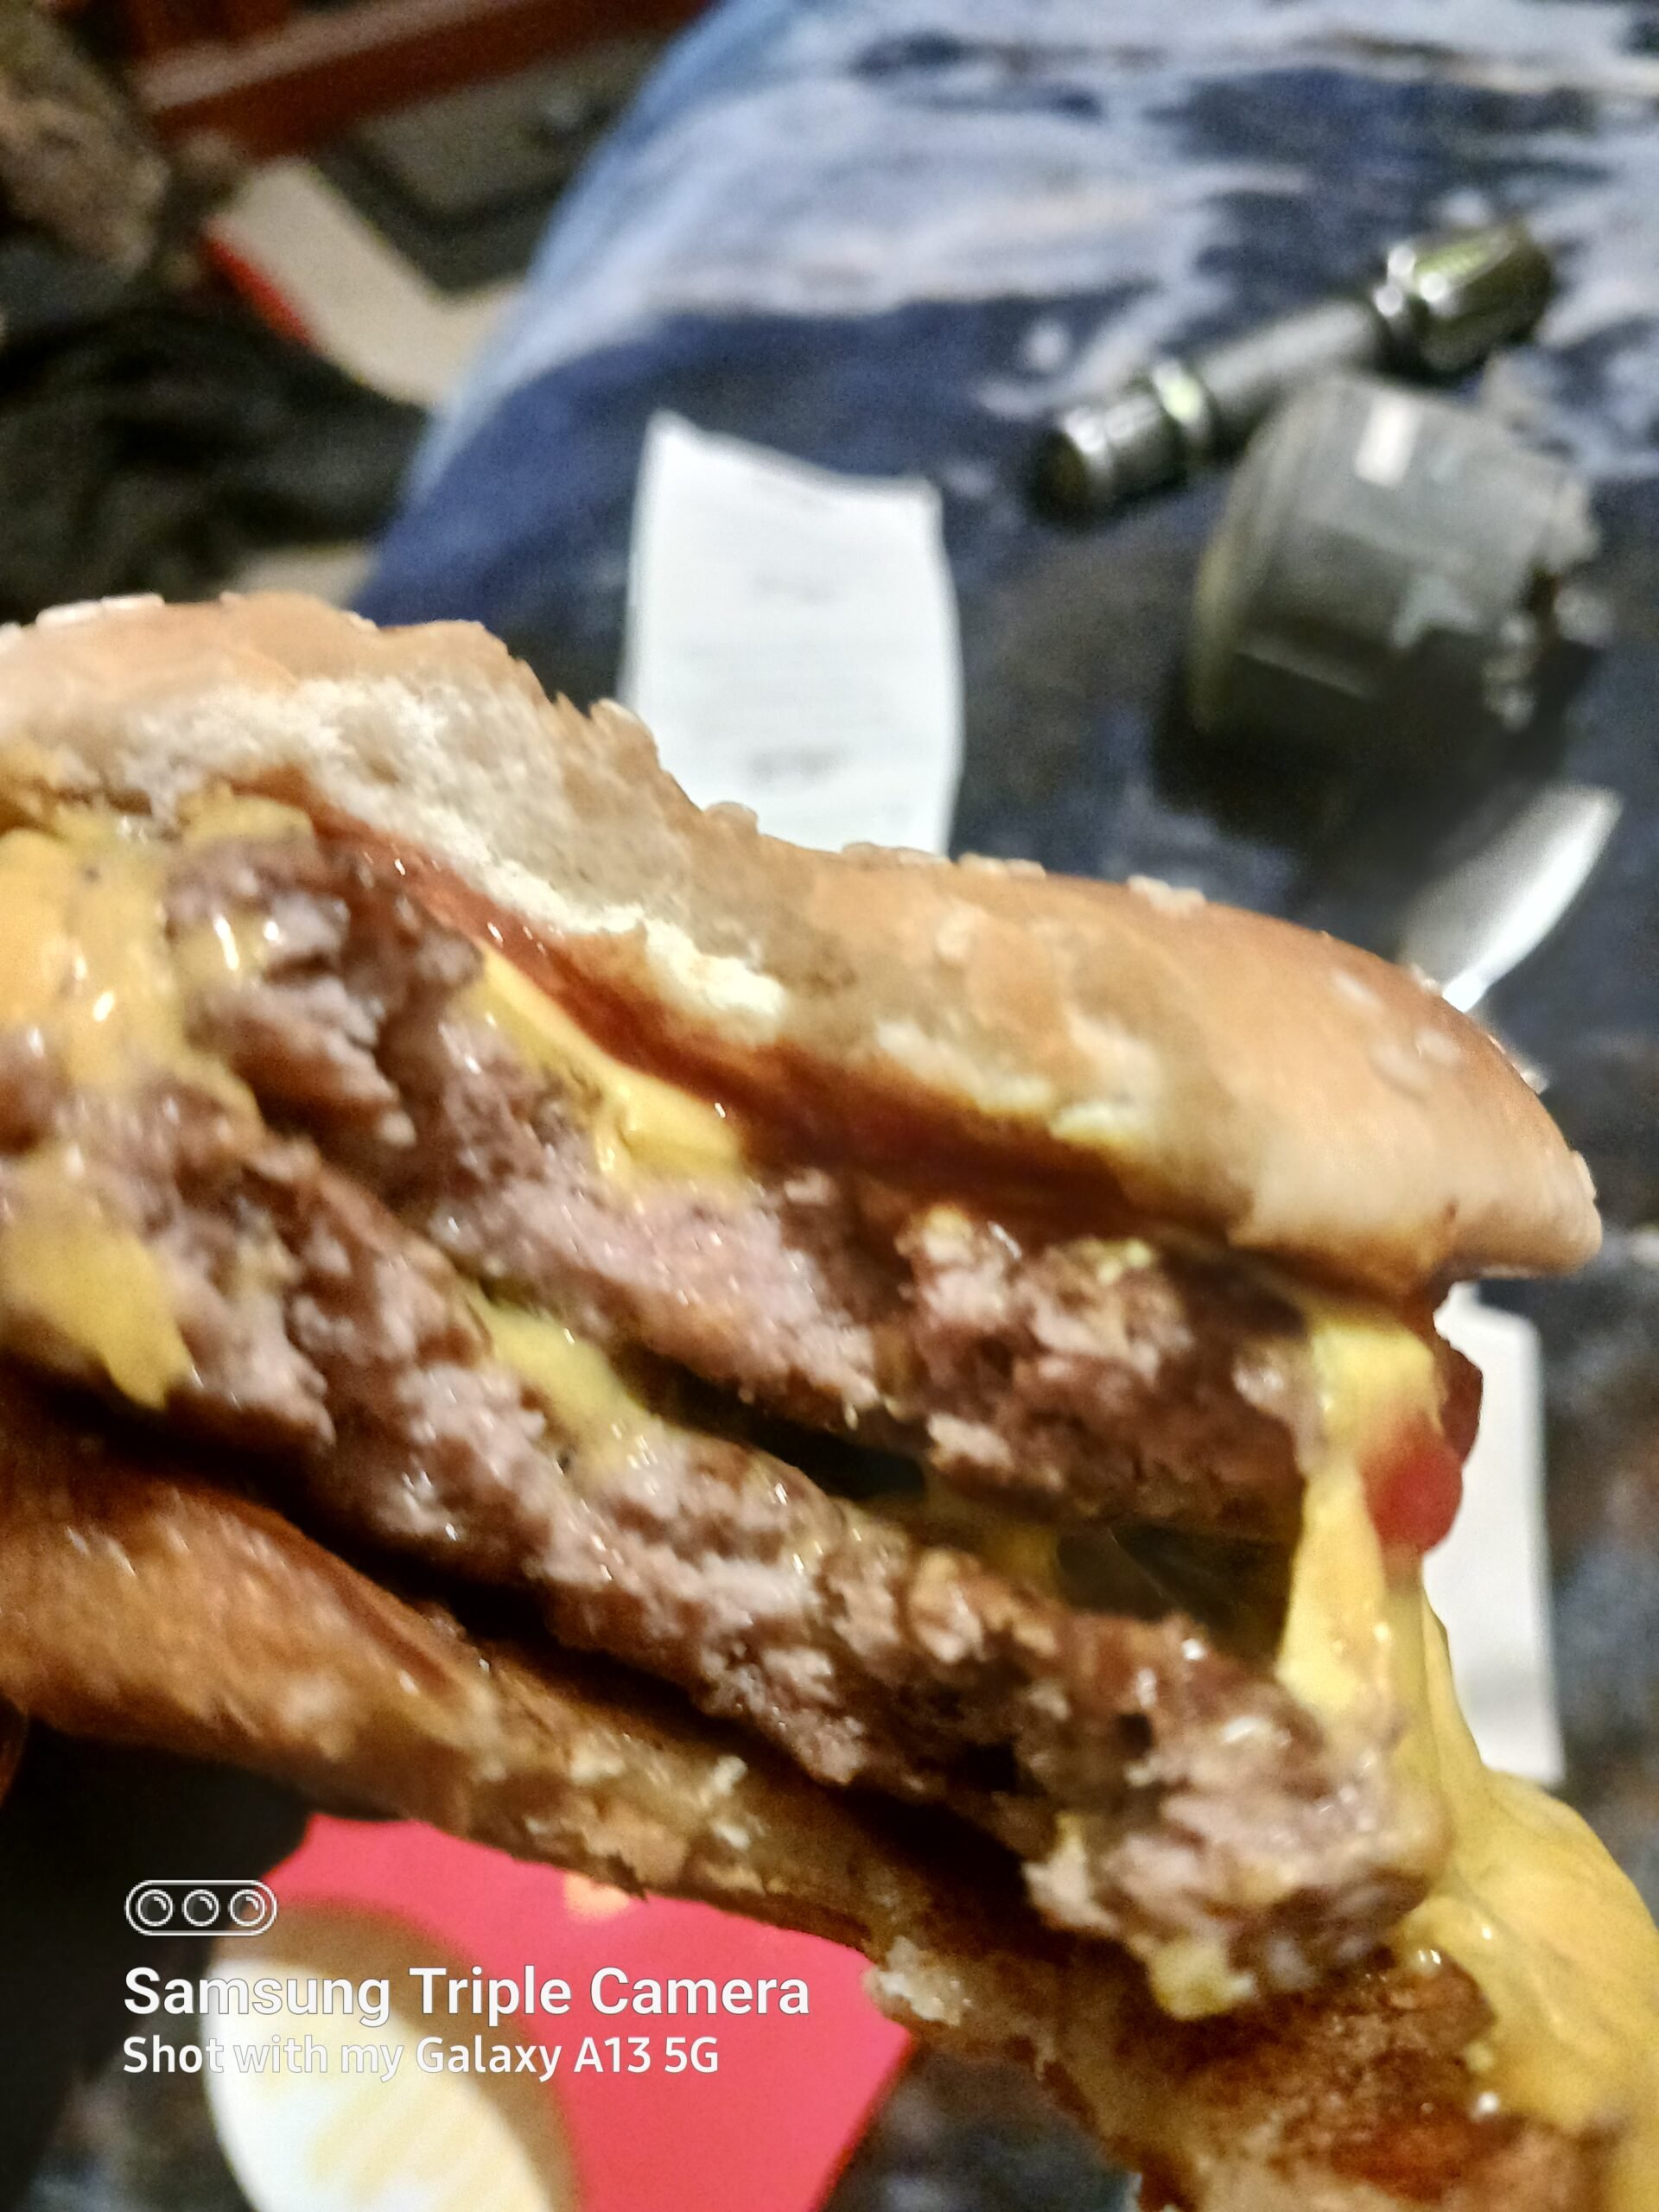 McDonalds complaint Raw food danger